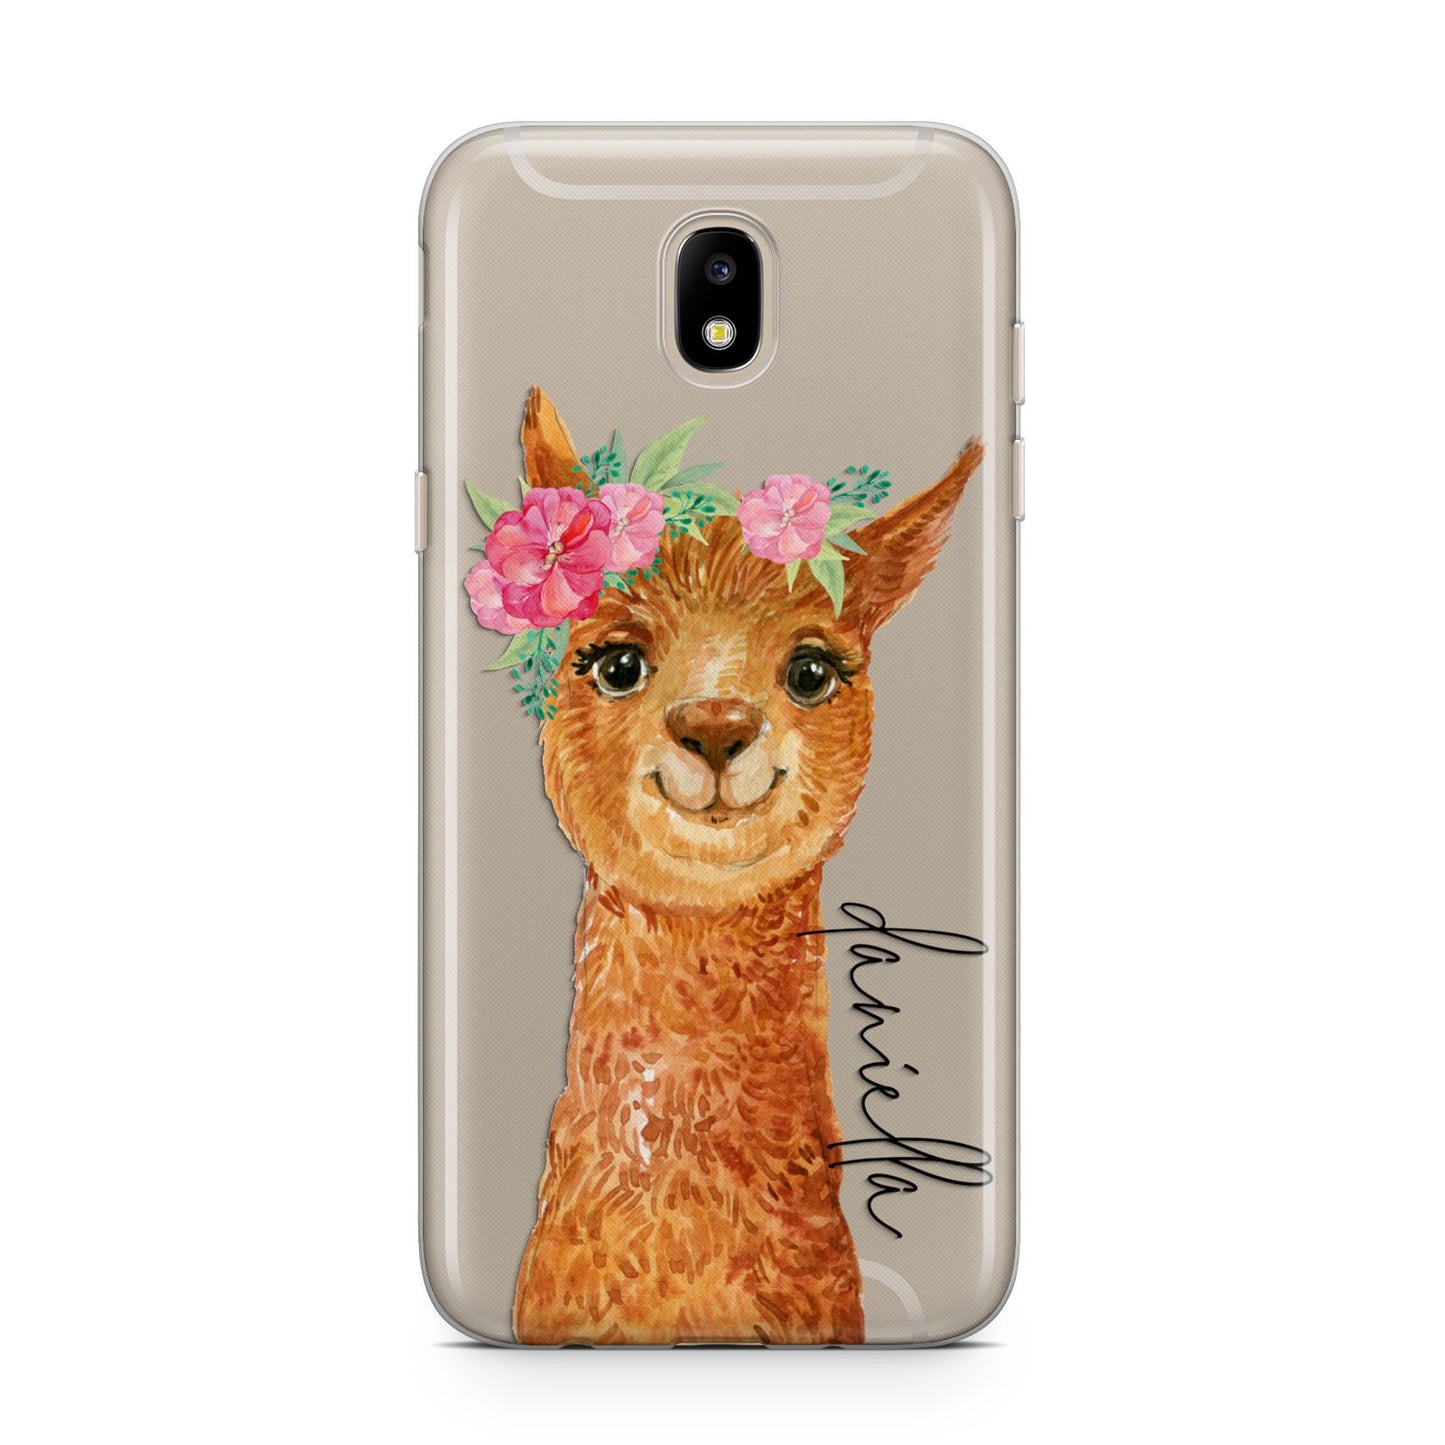 Personalised Llama Samsung J5 2017 Case